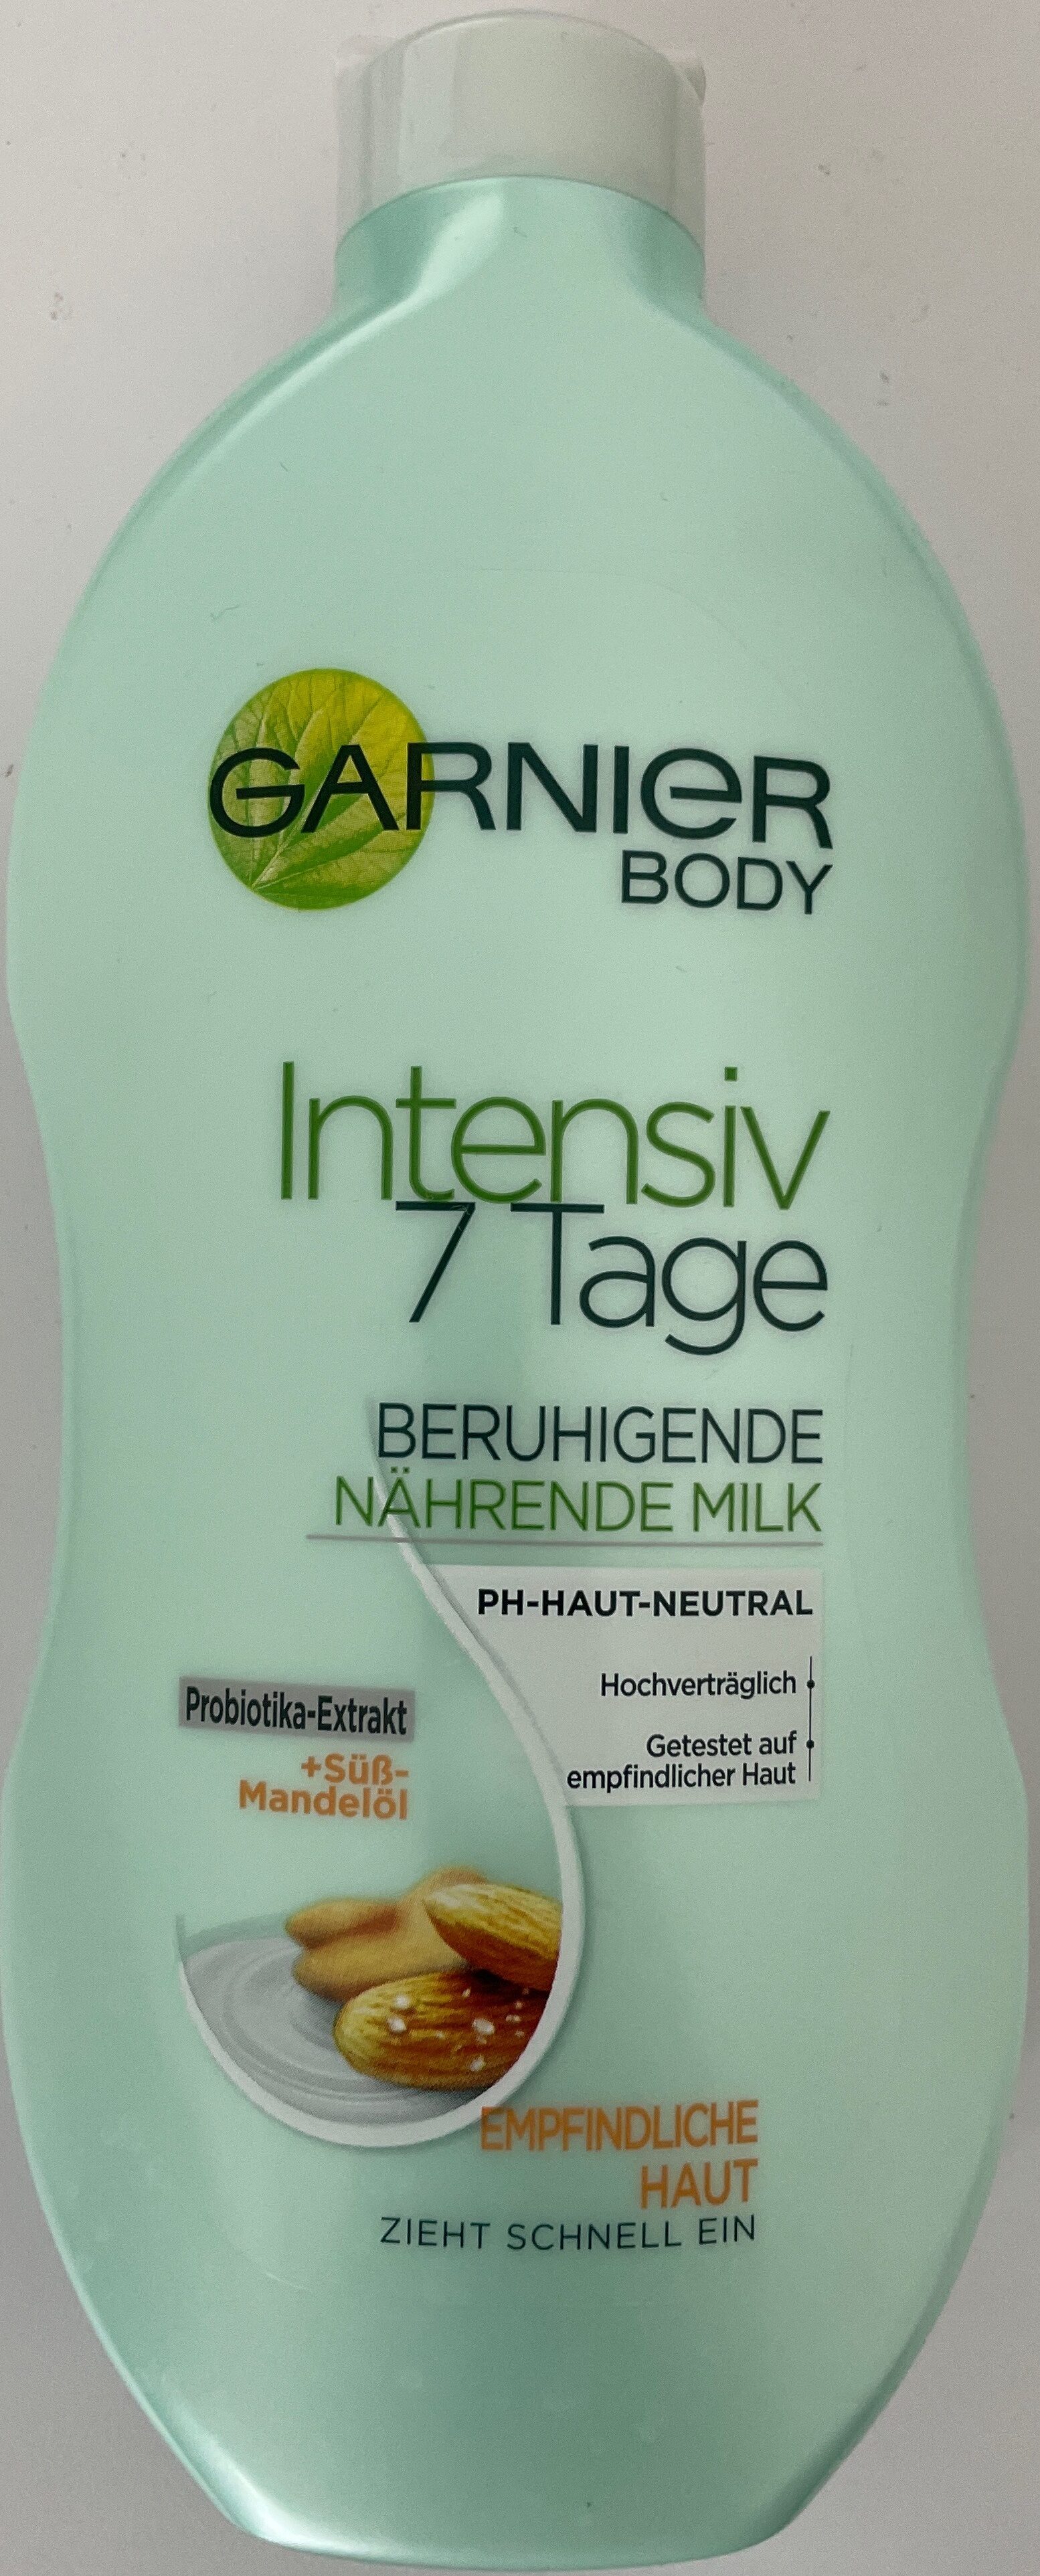 Garnier body Intensive 7 Tage - Product - de